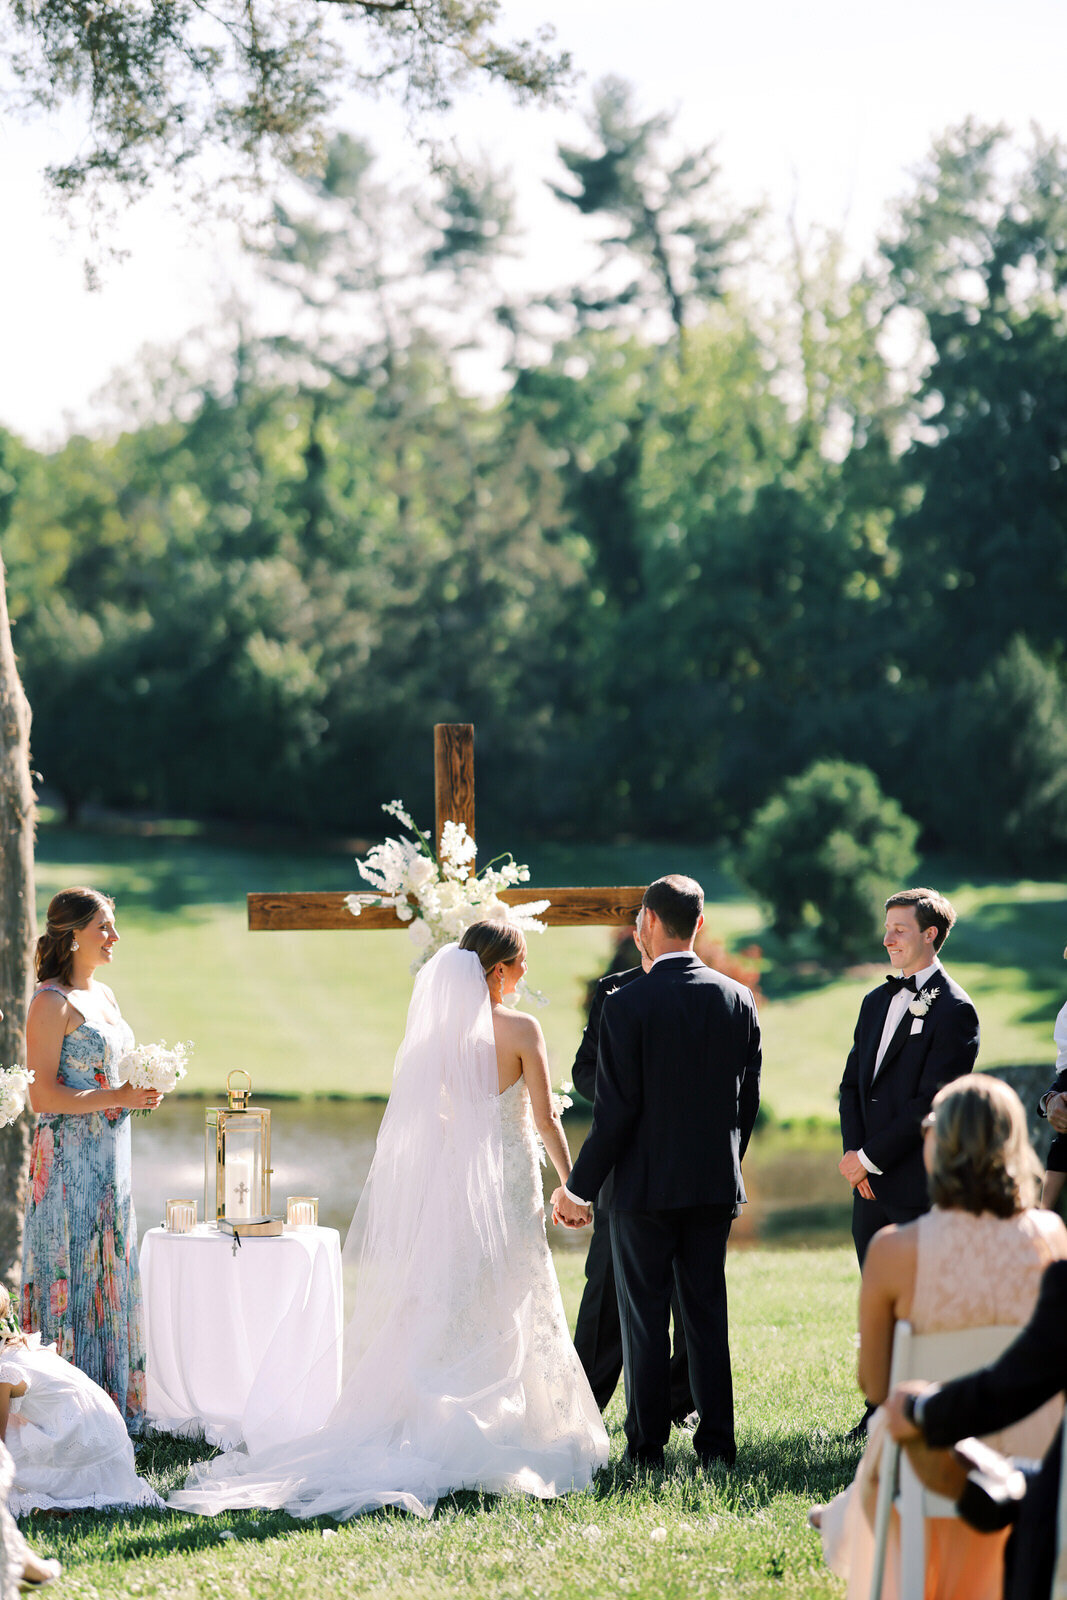 Elegant floral spring wedding at Graylyn Estate in Winston-Salem, North Carolina.